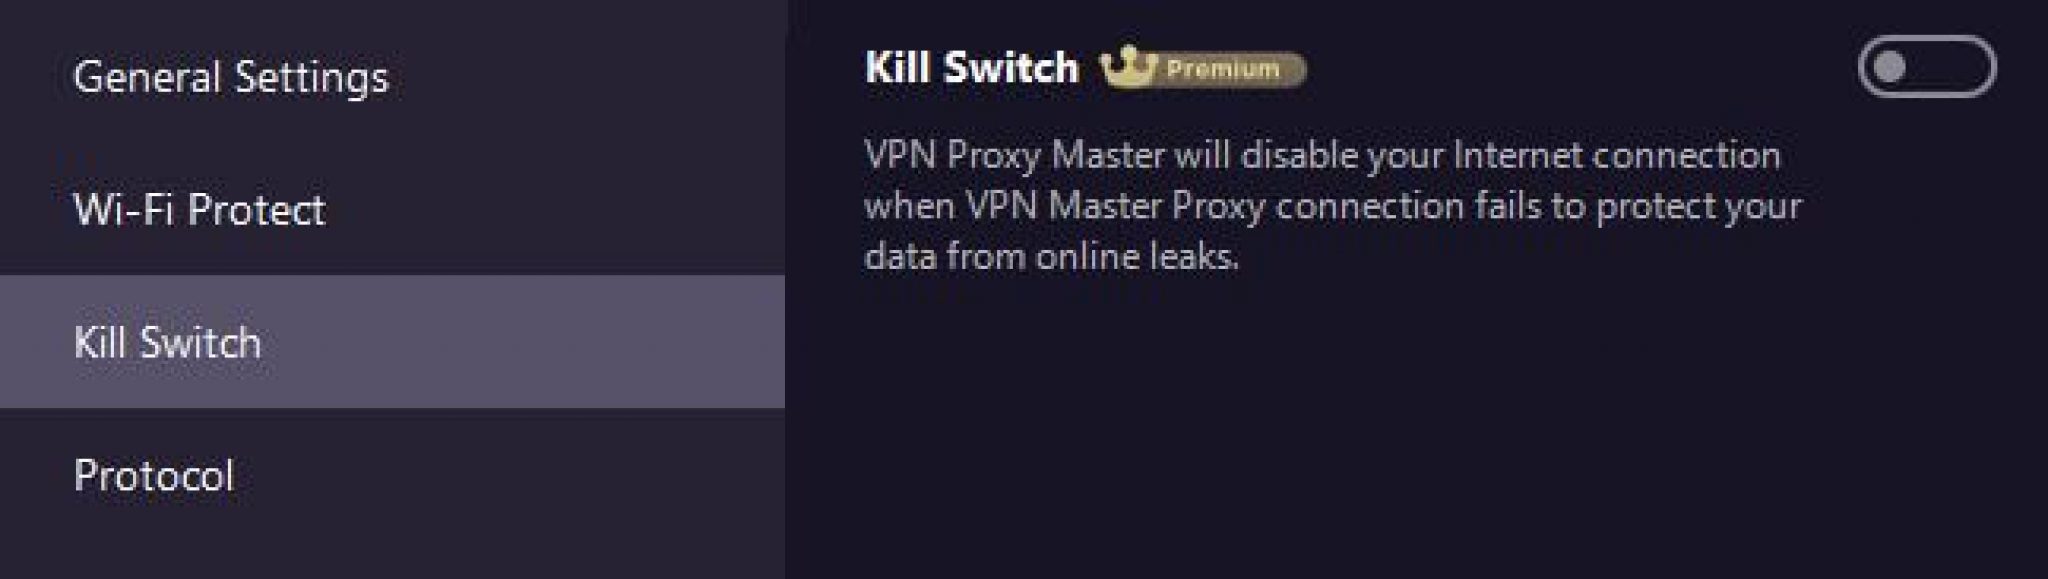 vpn proxy master not working